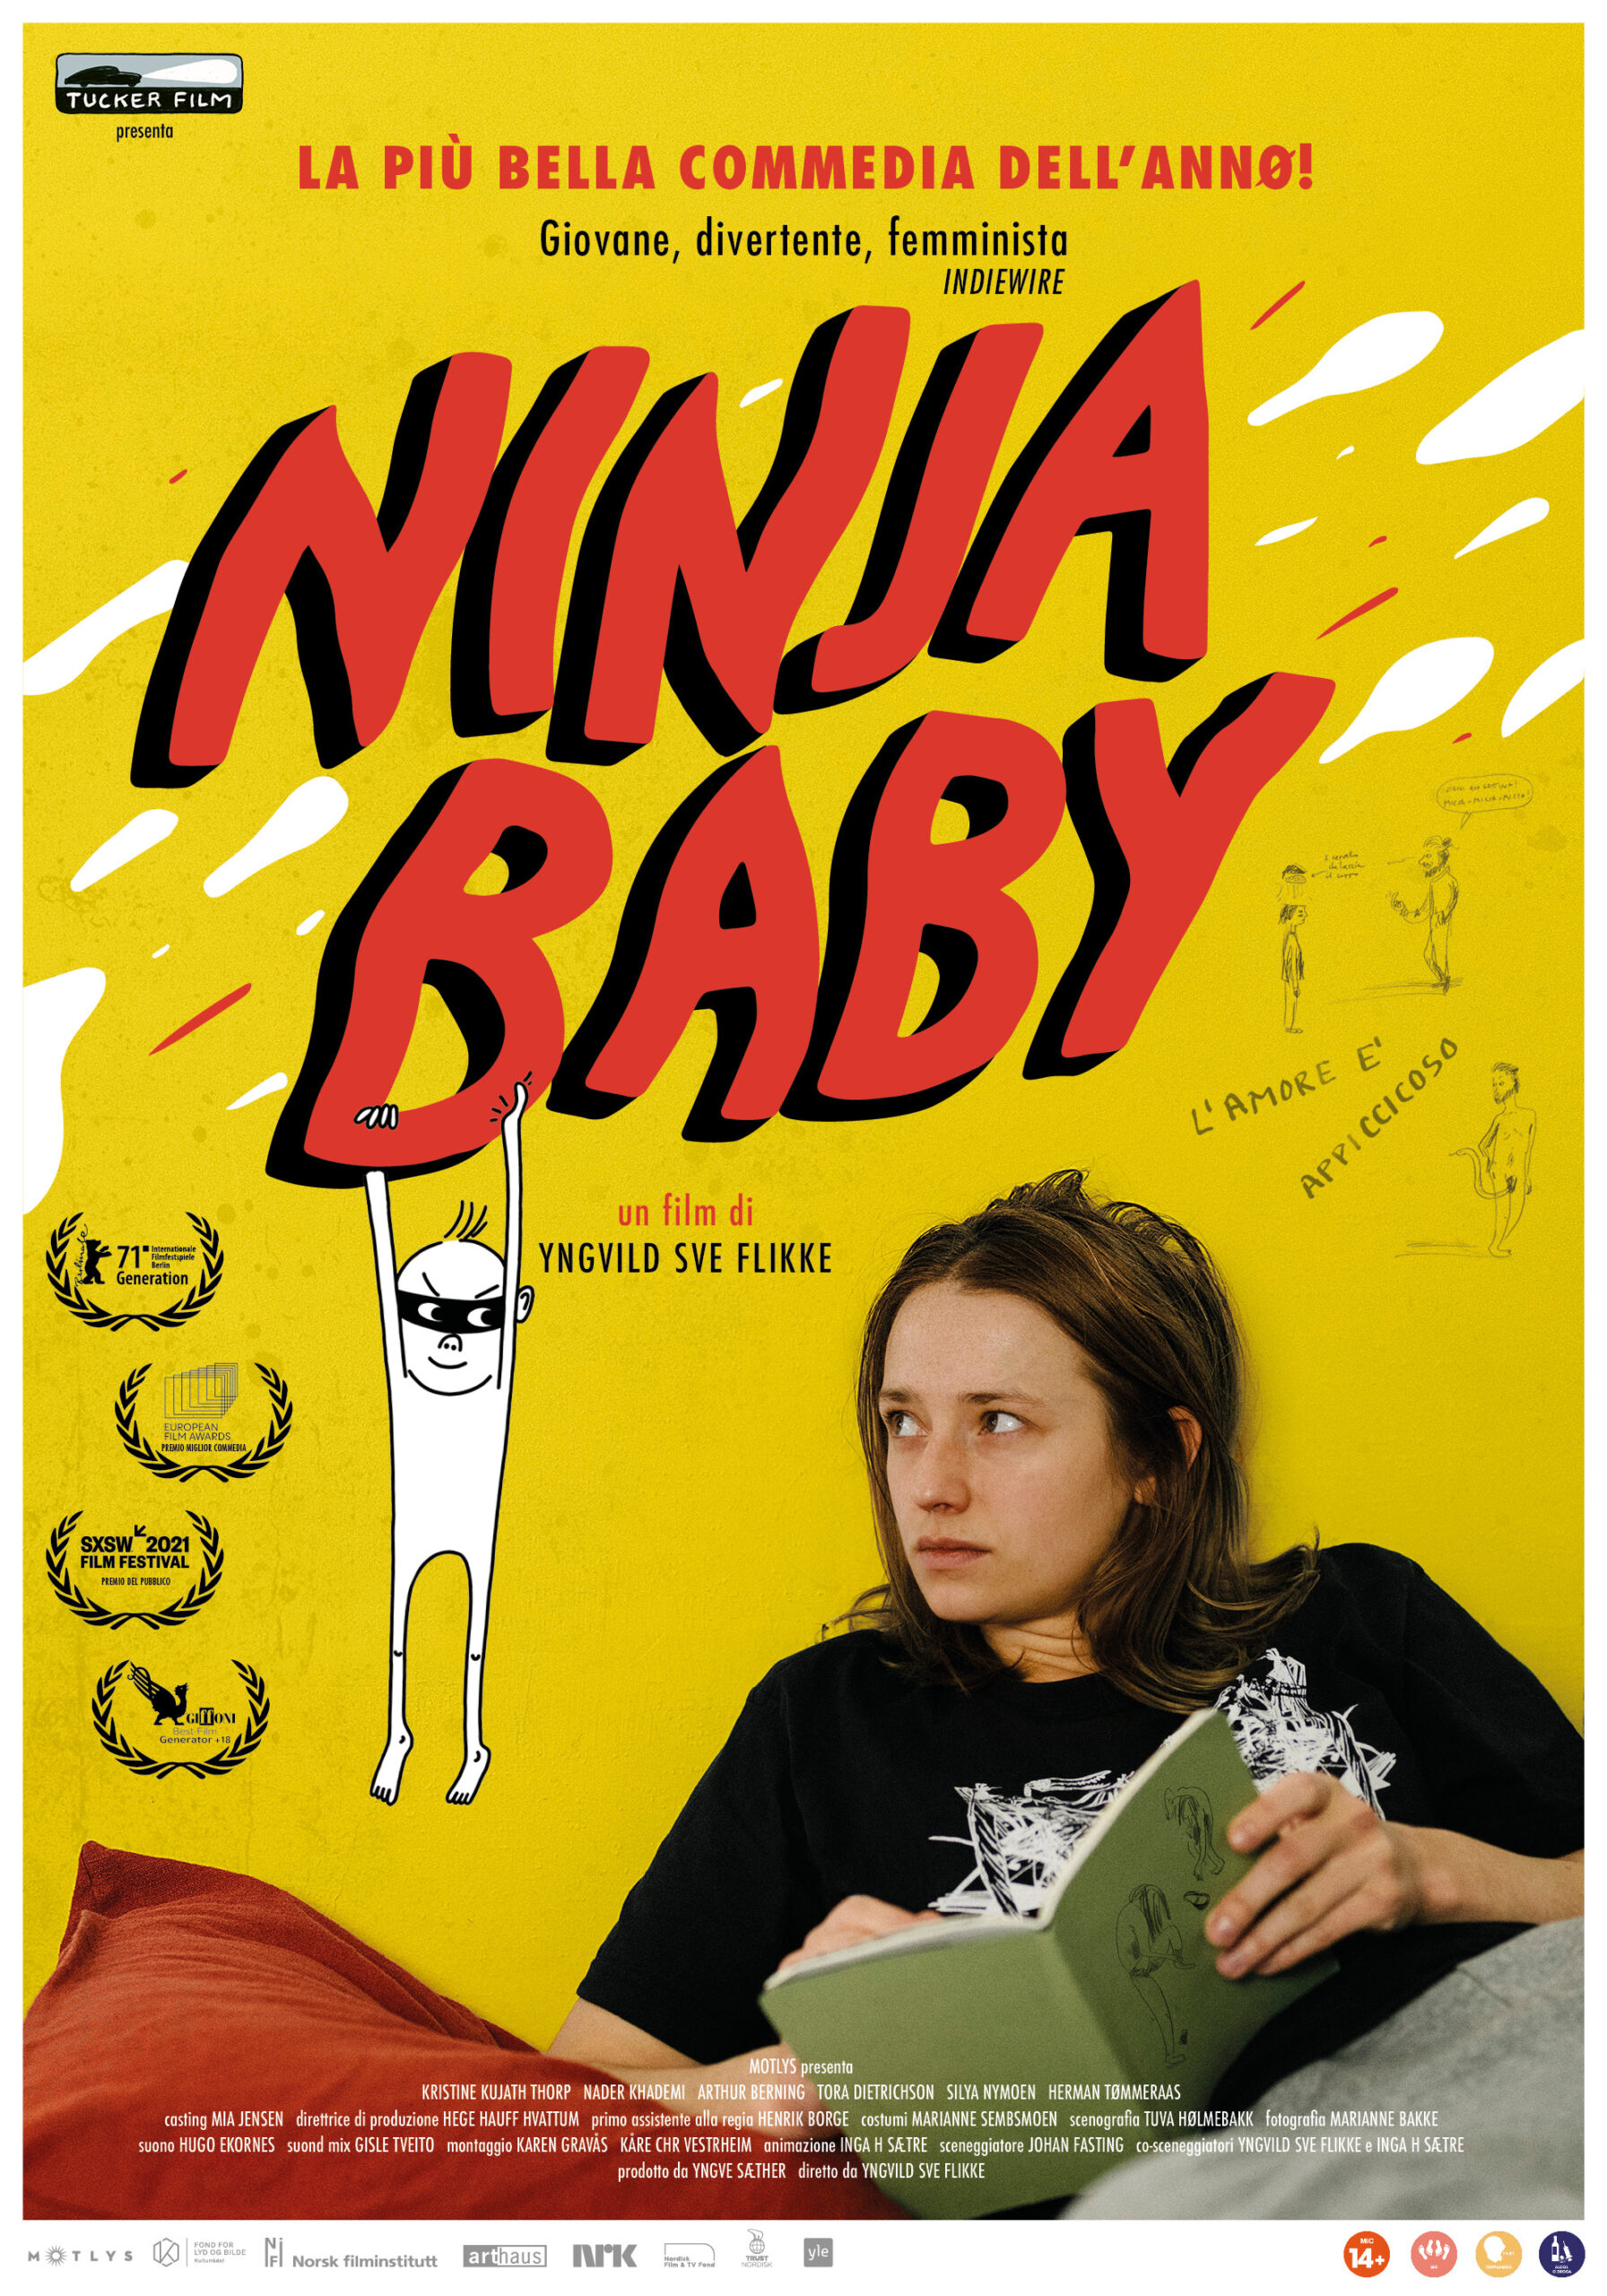 "Ninjababy", al cinema, dal 13 ottobre, la divertentissima commedia cult norvegese!